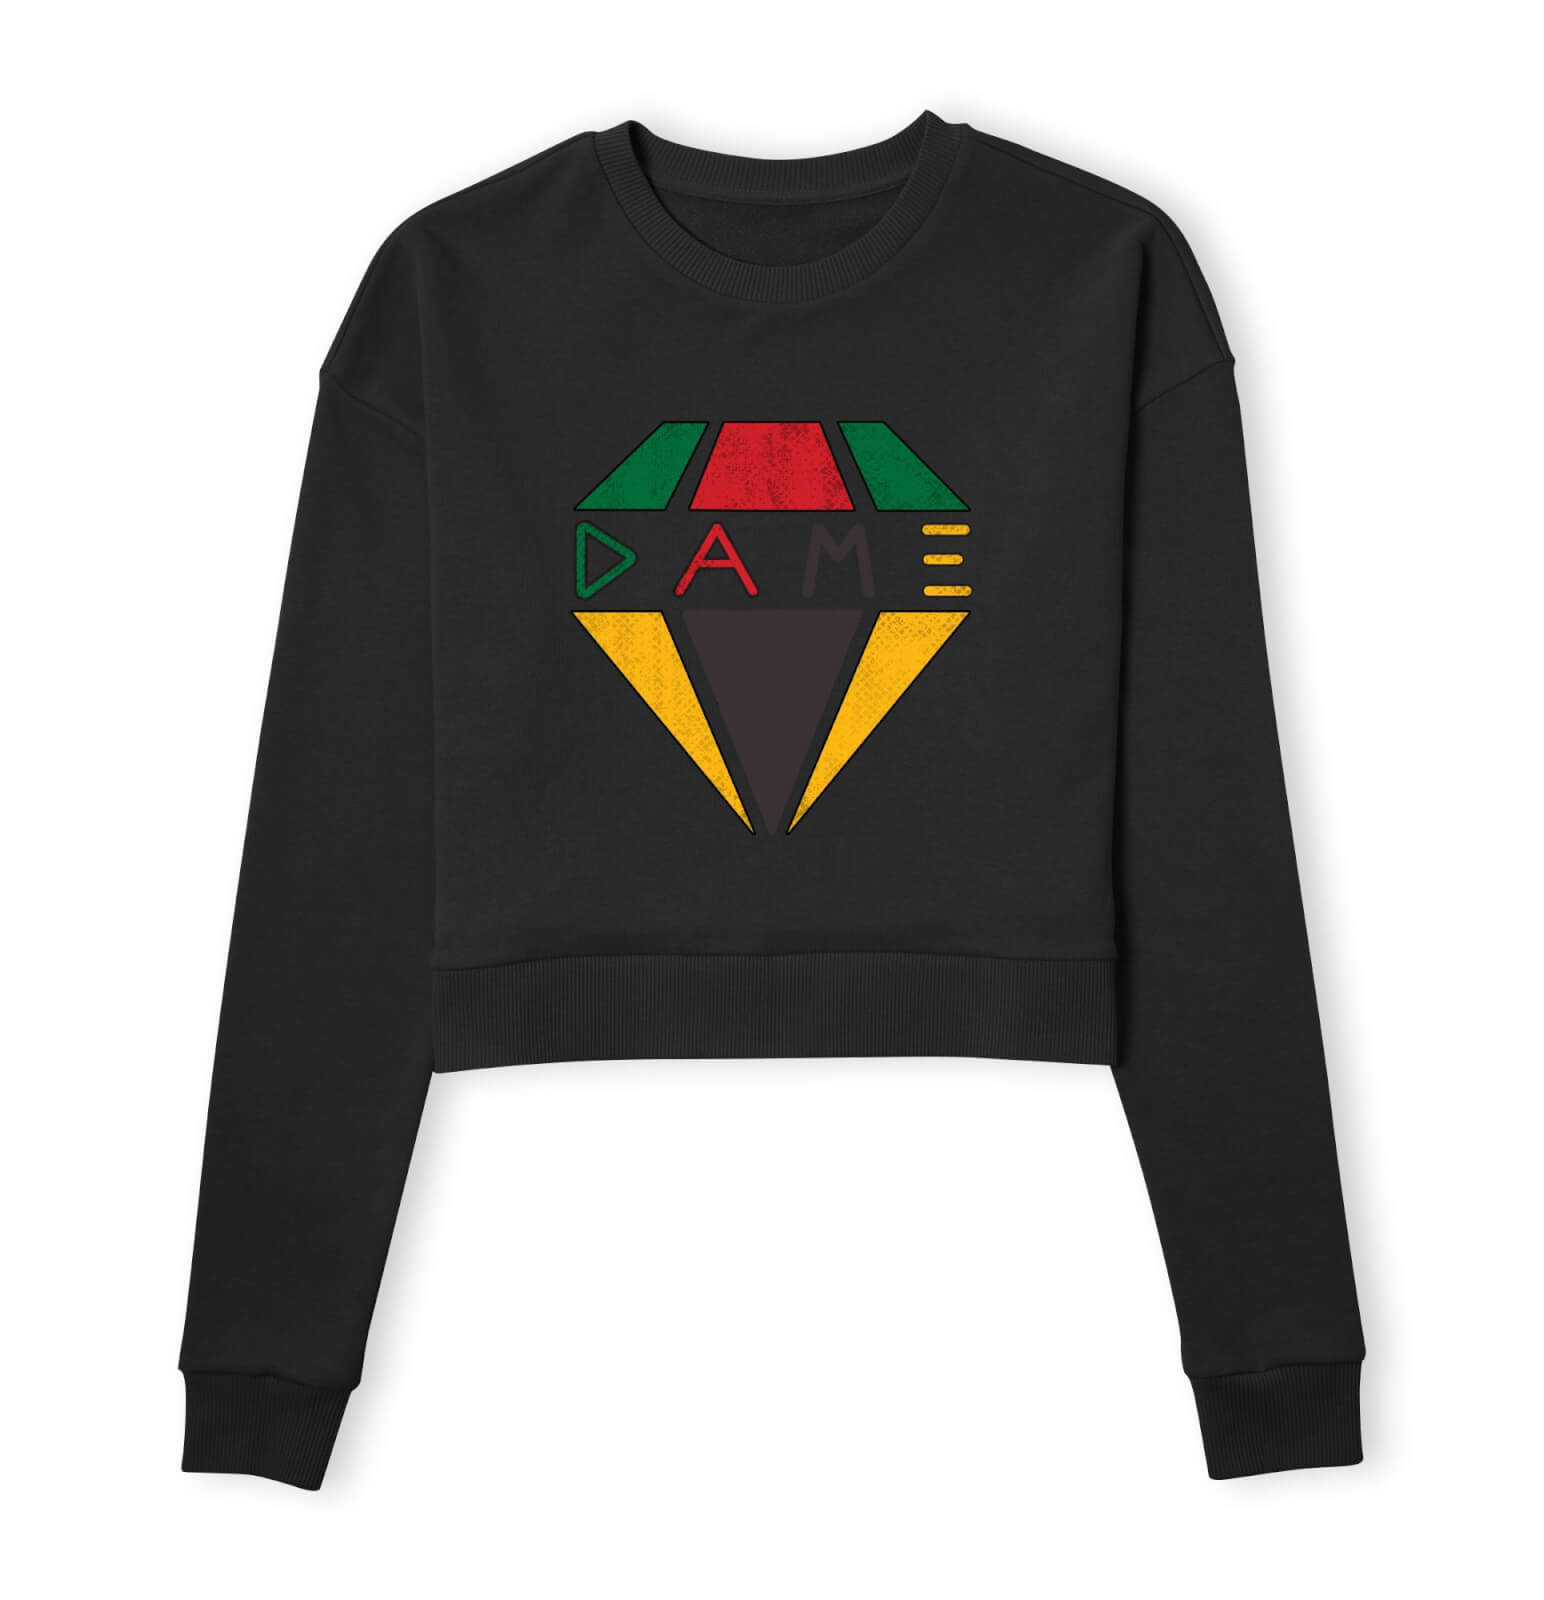 original hero creed dame diamond logo women's cropped sweatshirt - black - xs